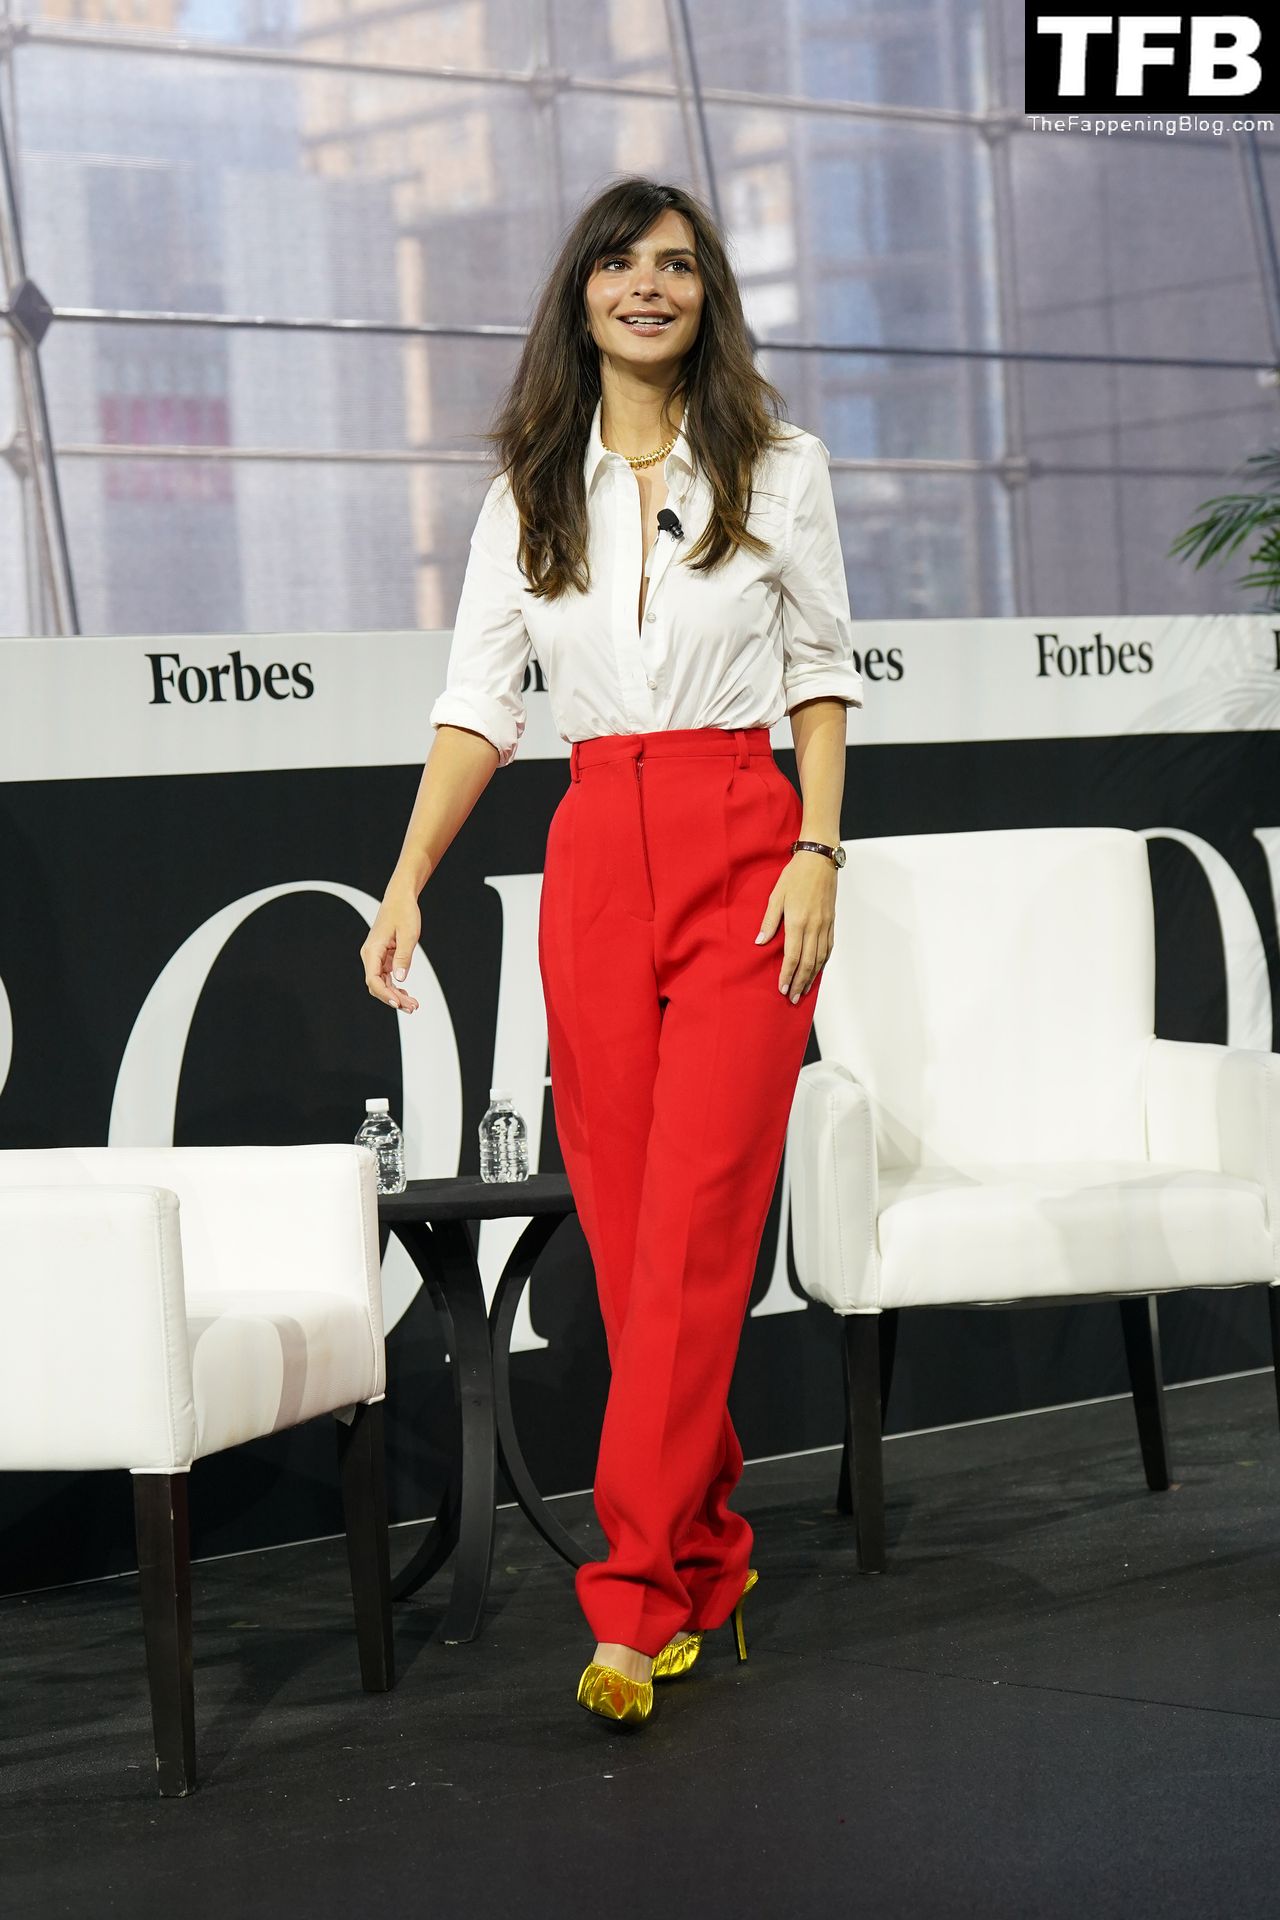 Emily Ratajkowski Sexy The Fappening Blog 52 - Newly Single Emily Ratajkowski Attends Forbes Power Women’s Summit in NYC (66 Photos)